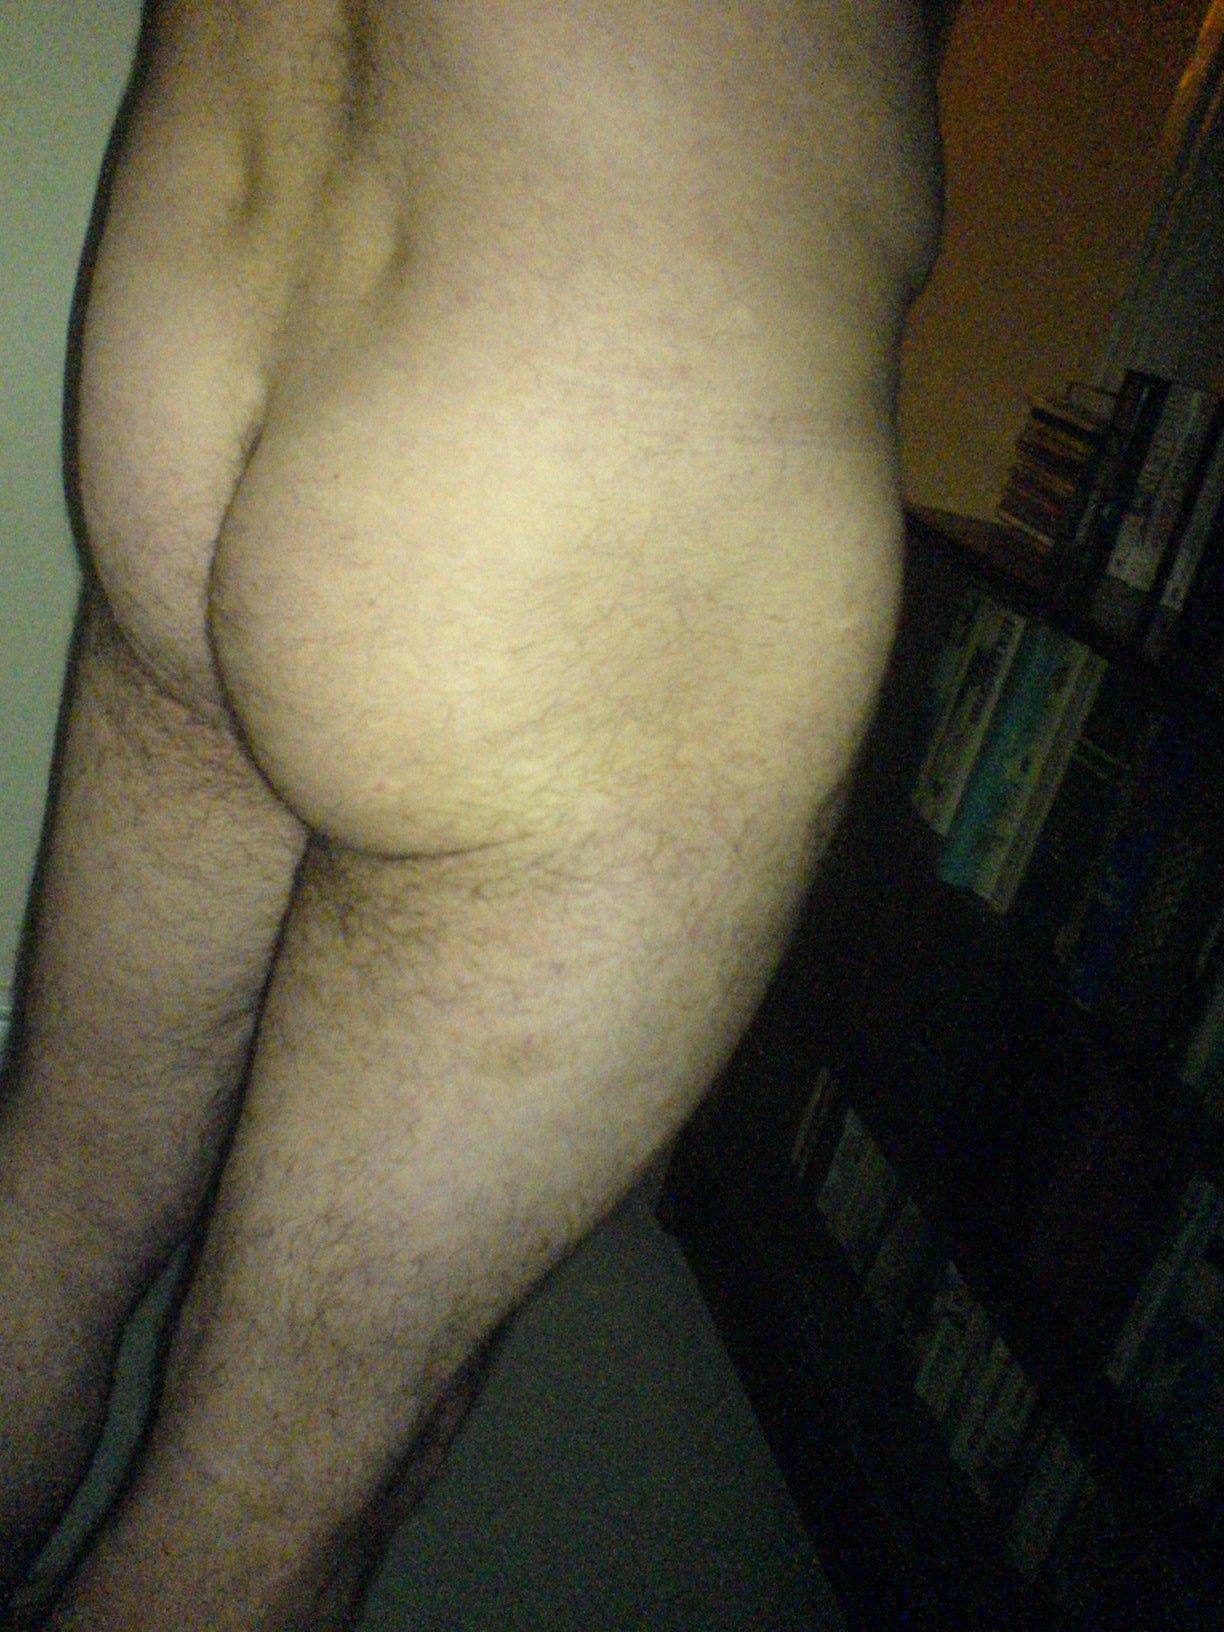 Ugly butt